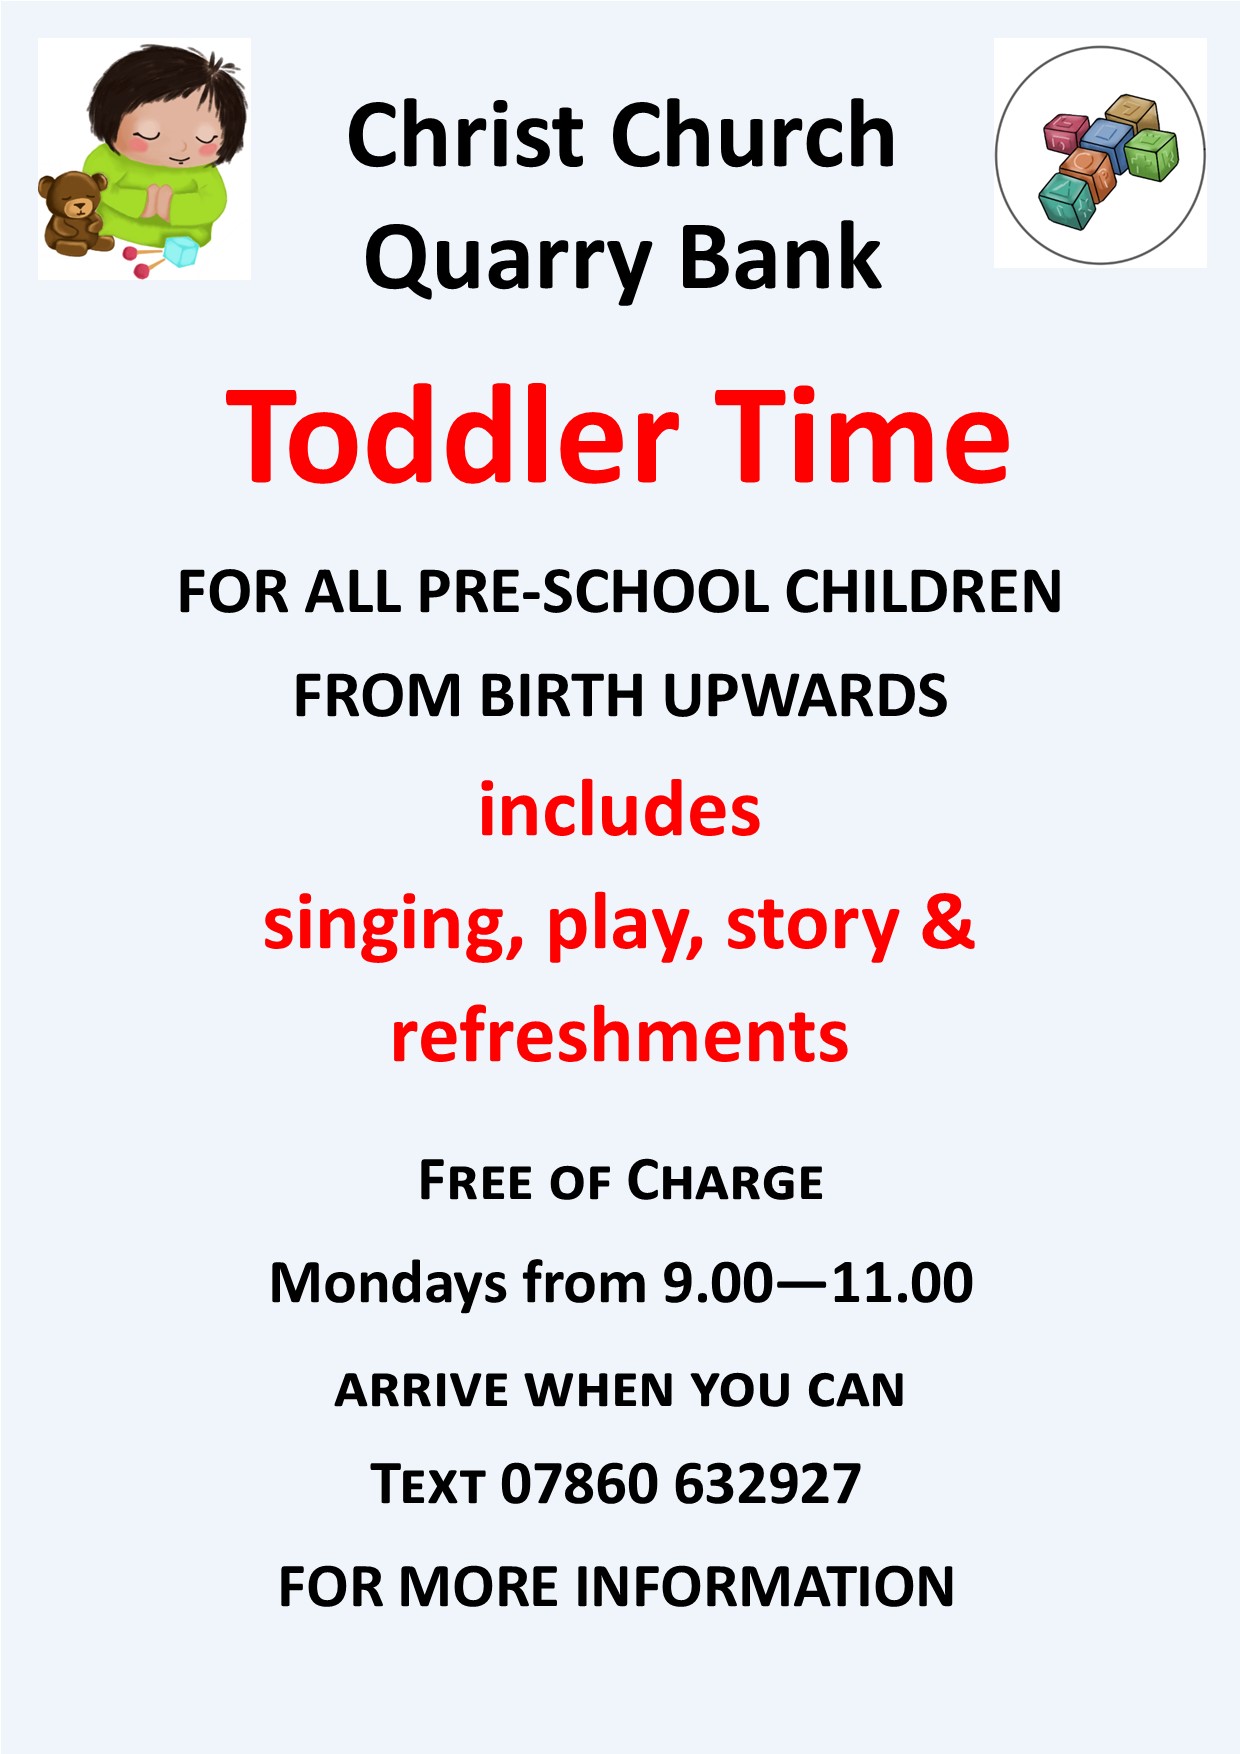 Christ Church Quarry Bank - Toddler Time